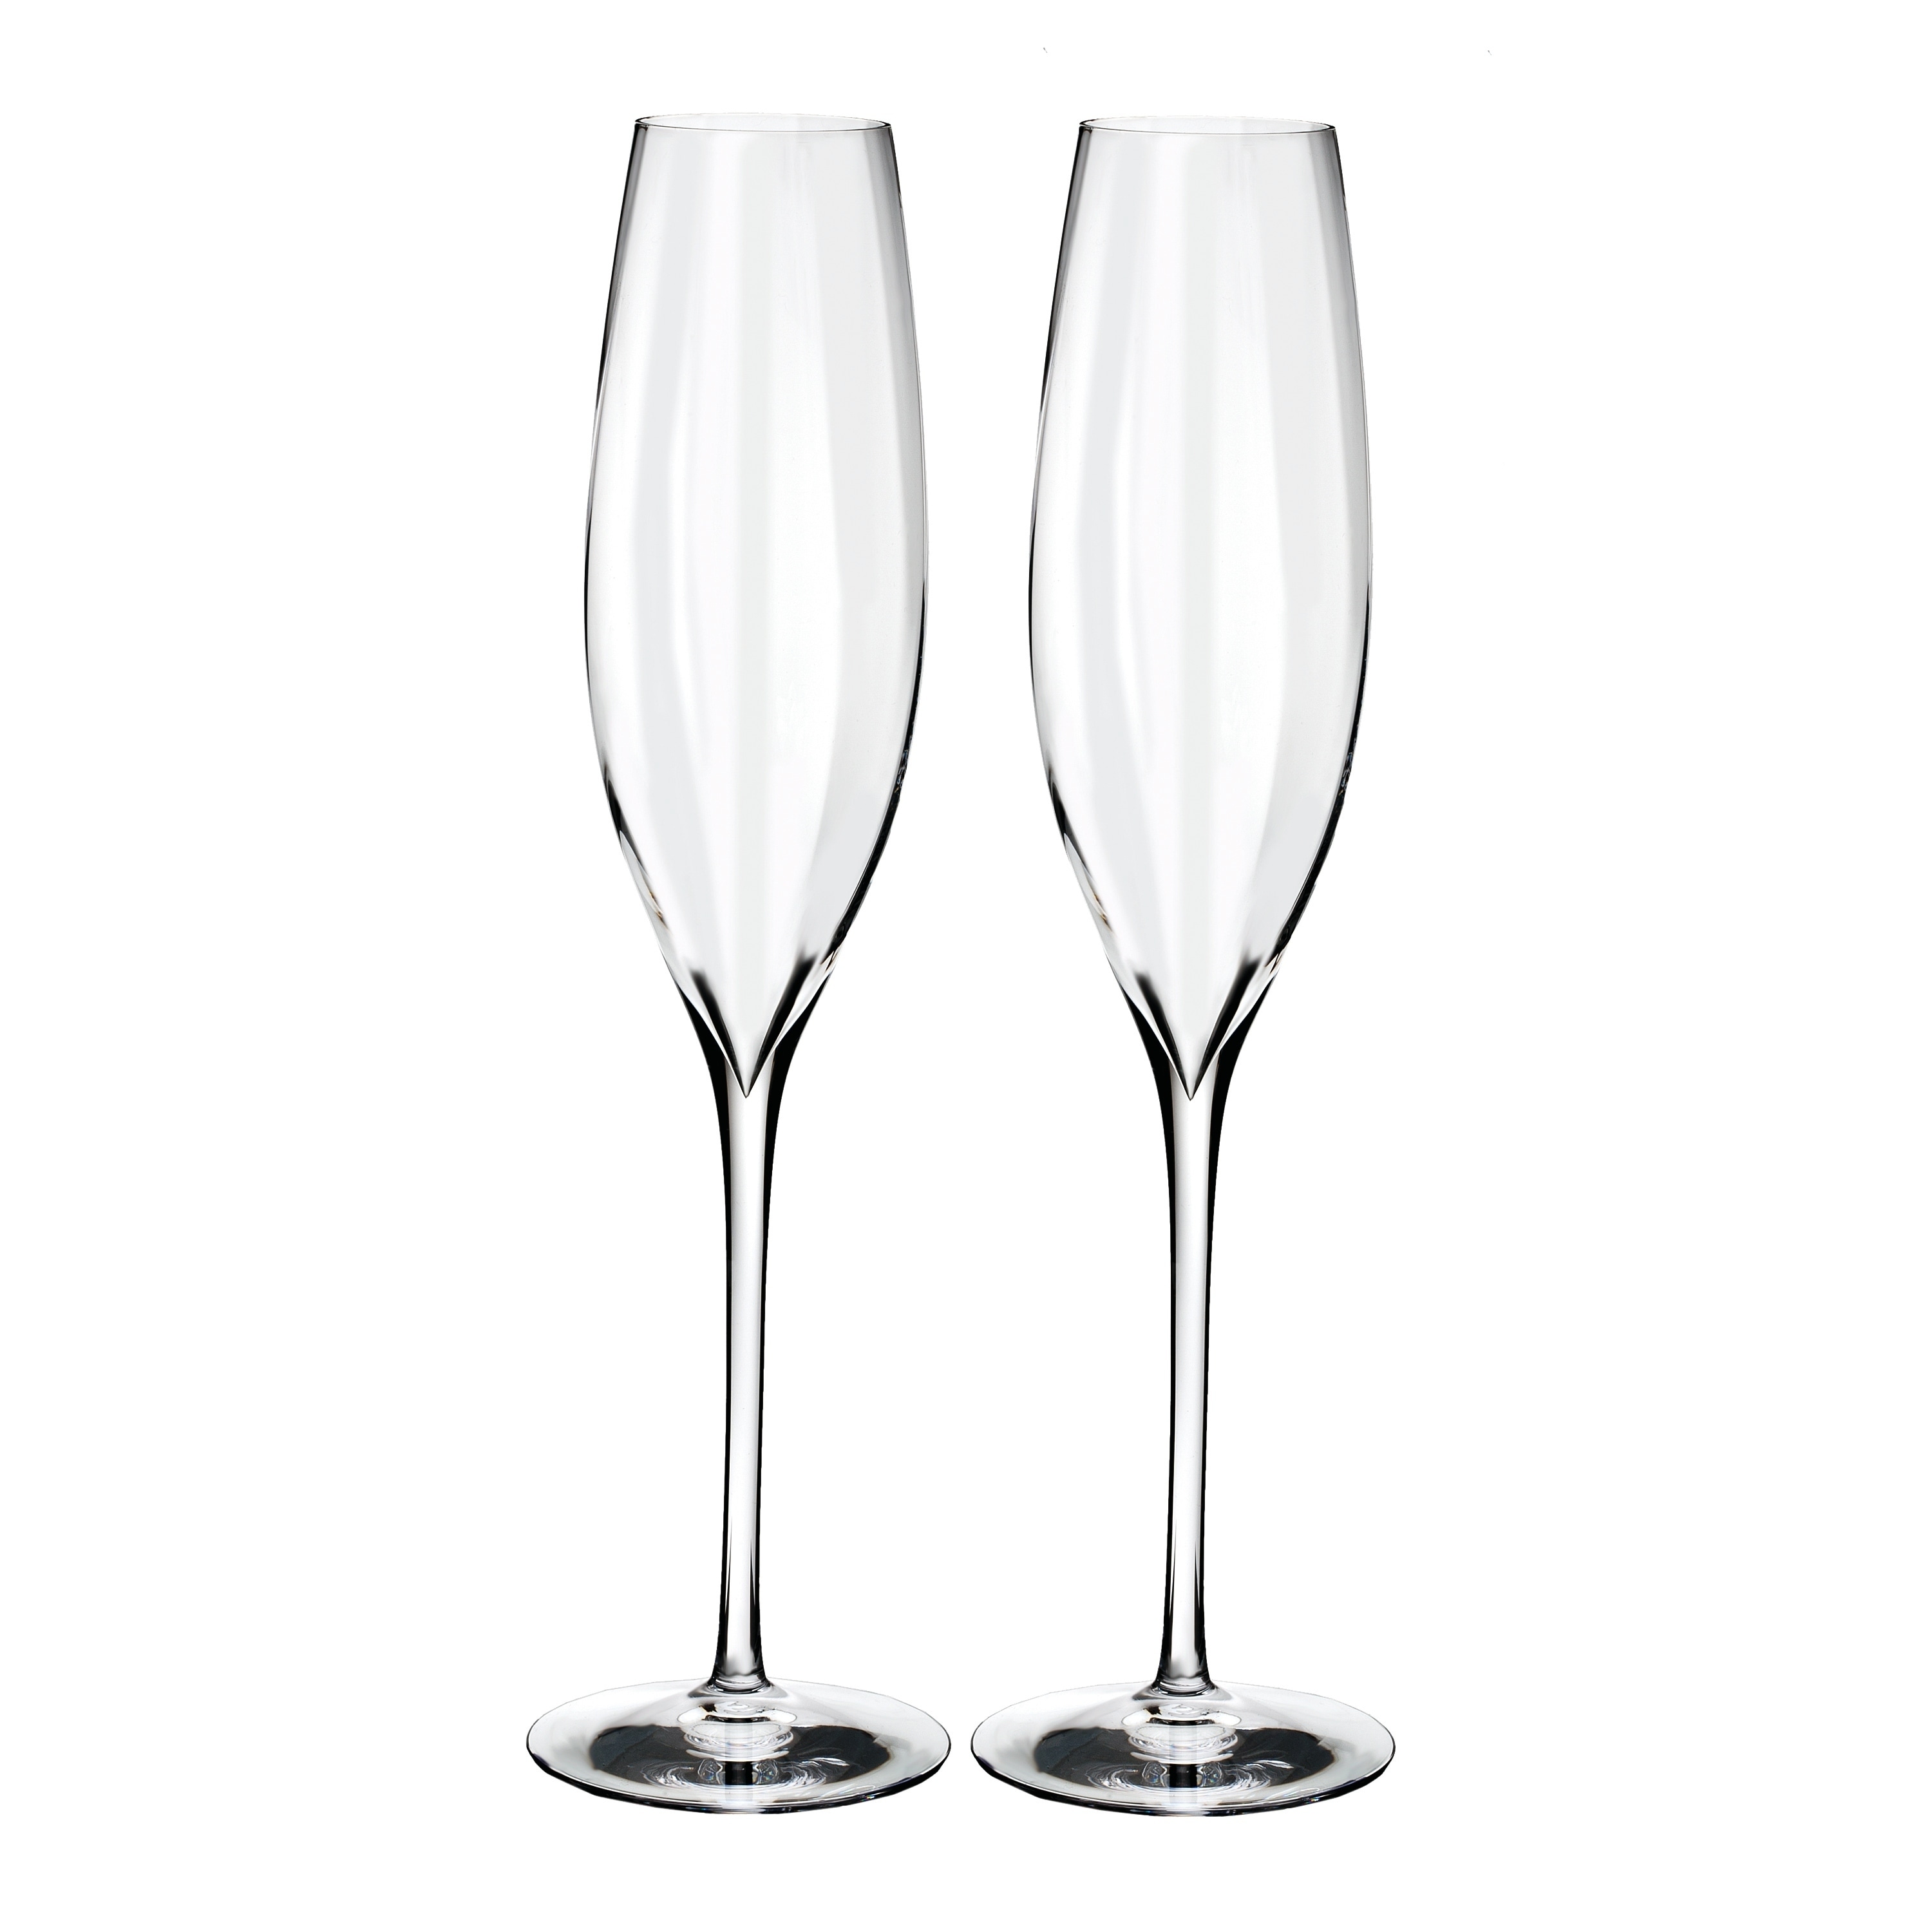 https://ak1.ostkcdn.com/images/products/22974435/Elegance-Optic-Clear-Classic-Champagne-Flute-Set-of-2-444f6a72-3230-4fa2-b6b9-1734abc209c2.jpg